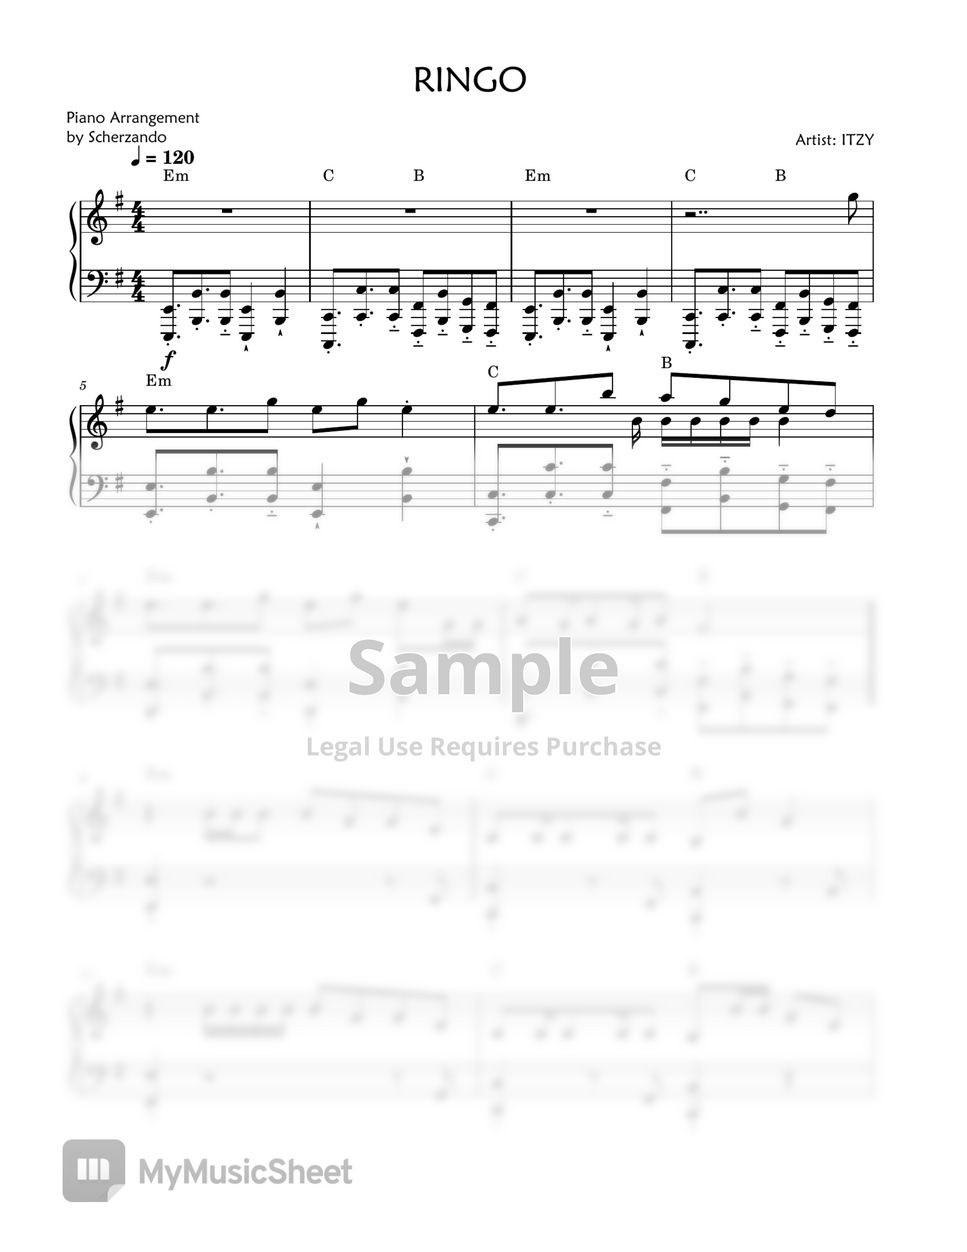 ITZY - RINGO (Piano Arrangement) by Scherzando